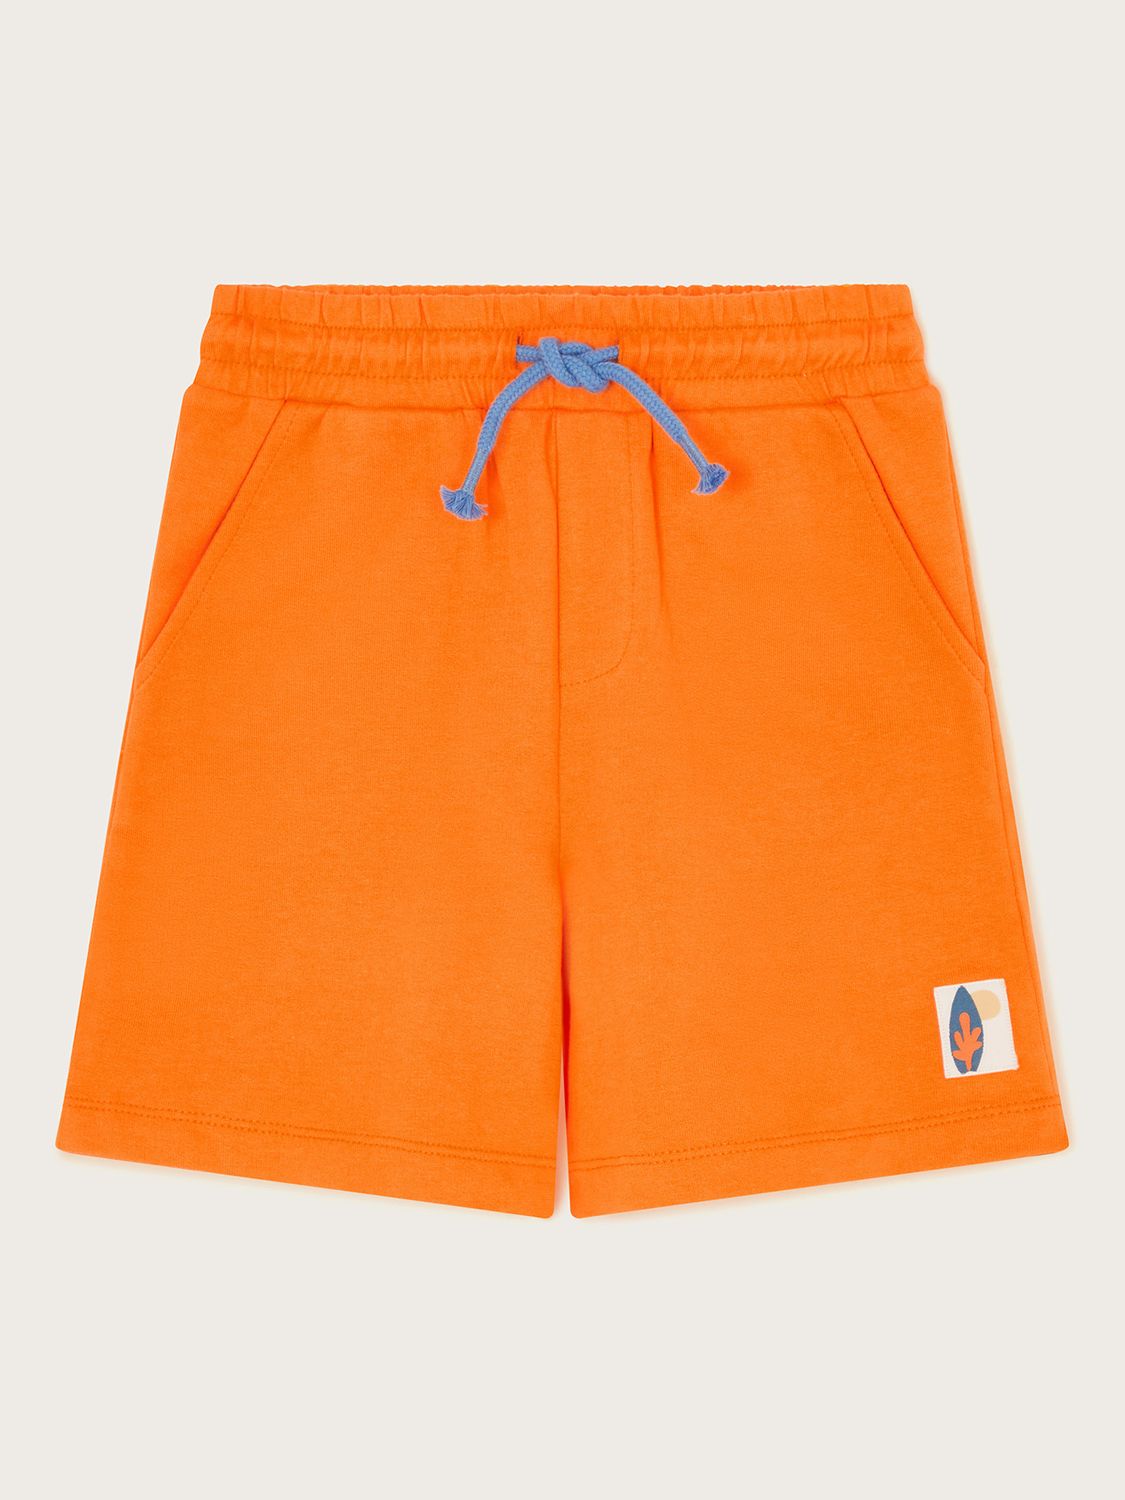 Monsoon Kids' Cotton Jogger Shorts, Orange, 3-4 years